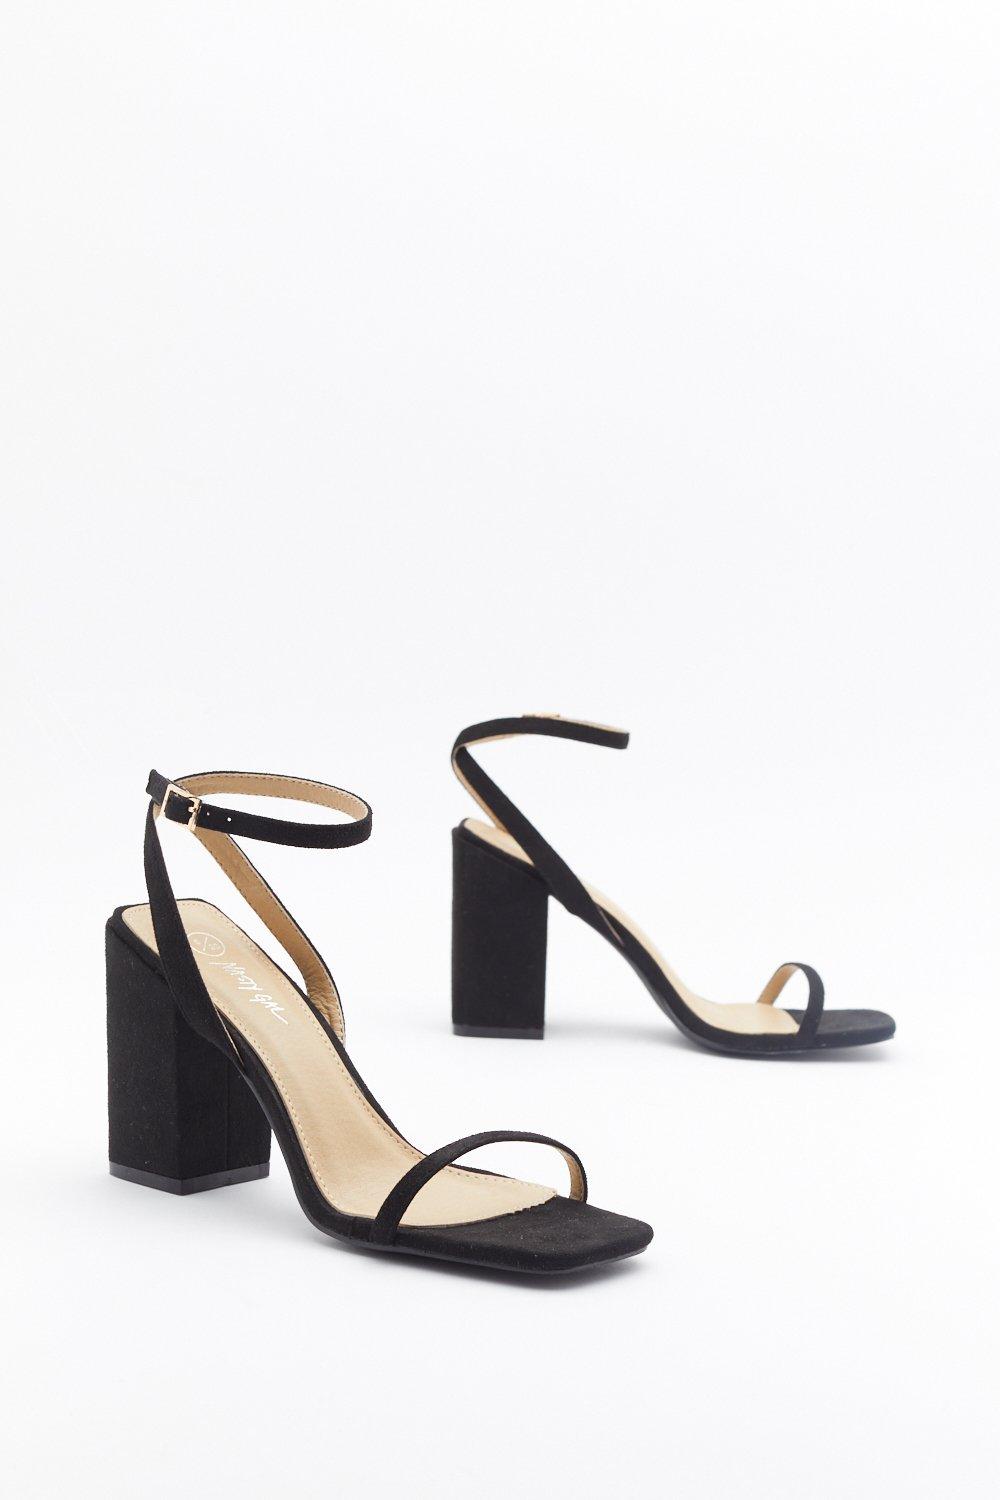 square heels